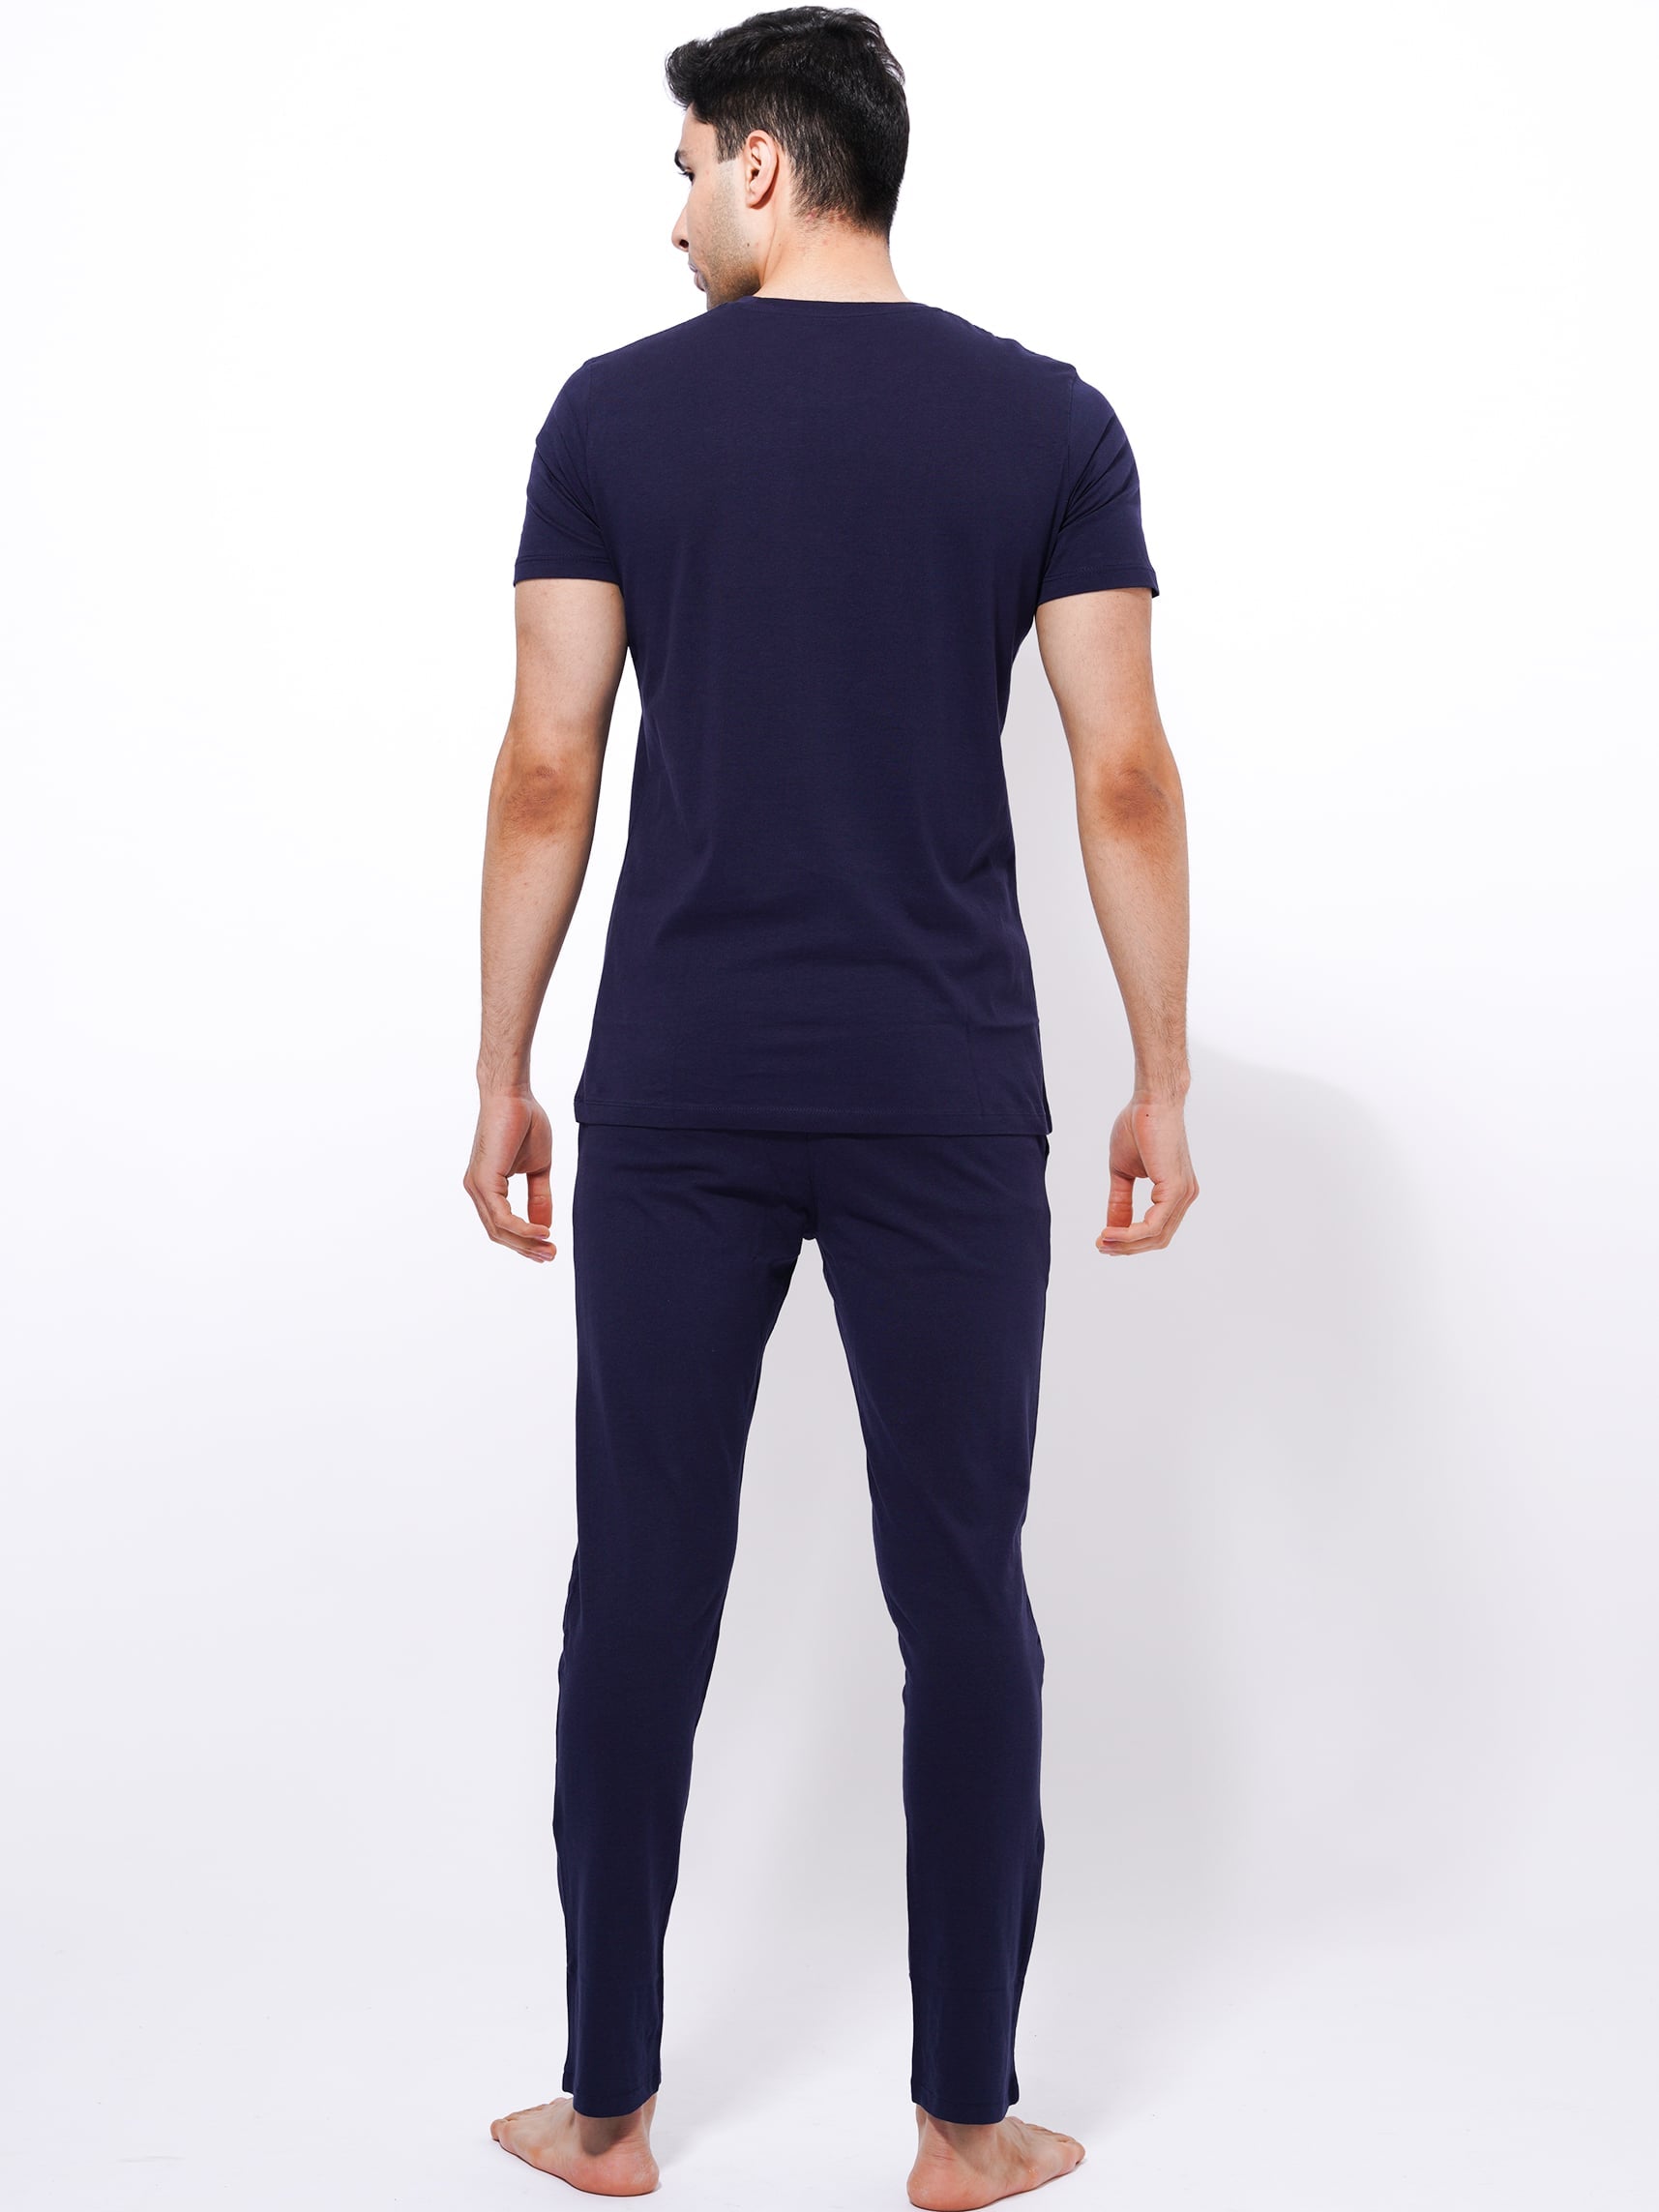 Men's Summer T-Shirt & Full Pants Set - inteblu